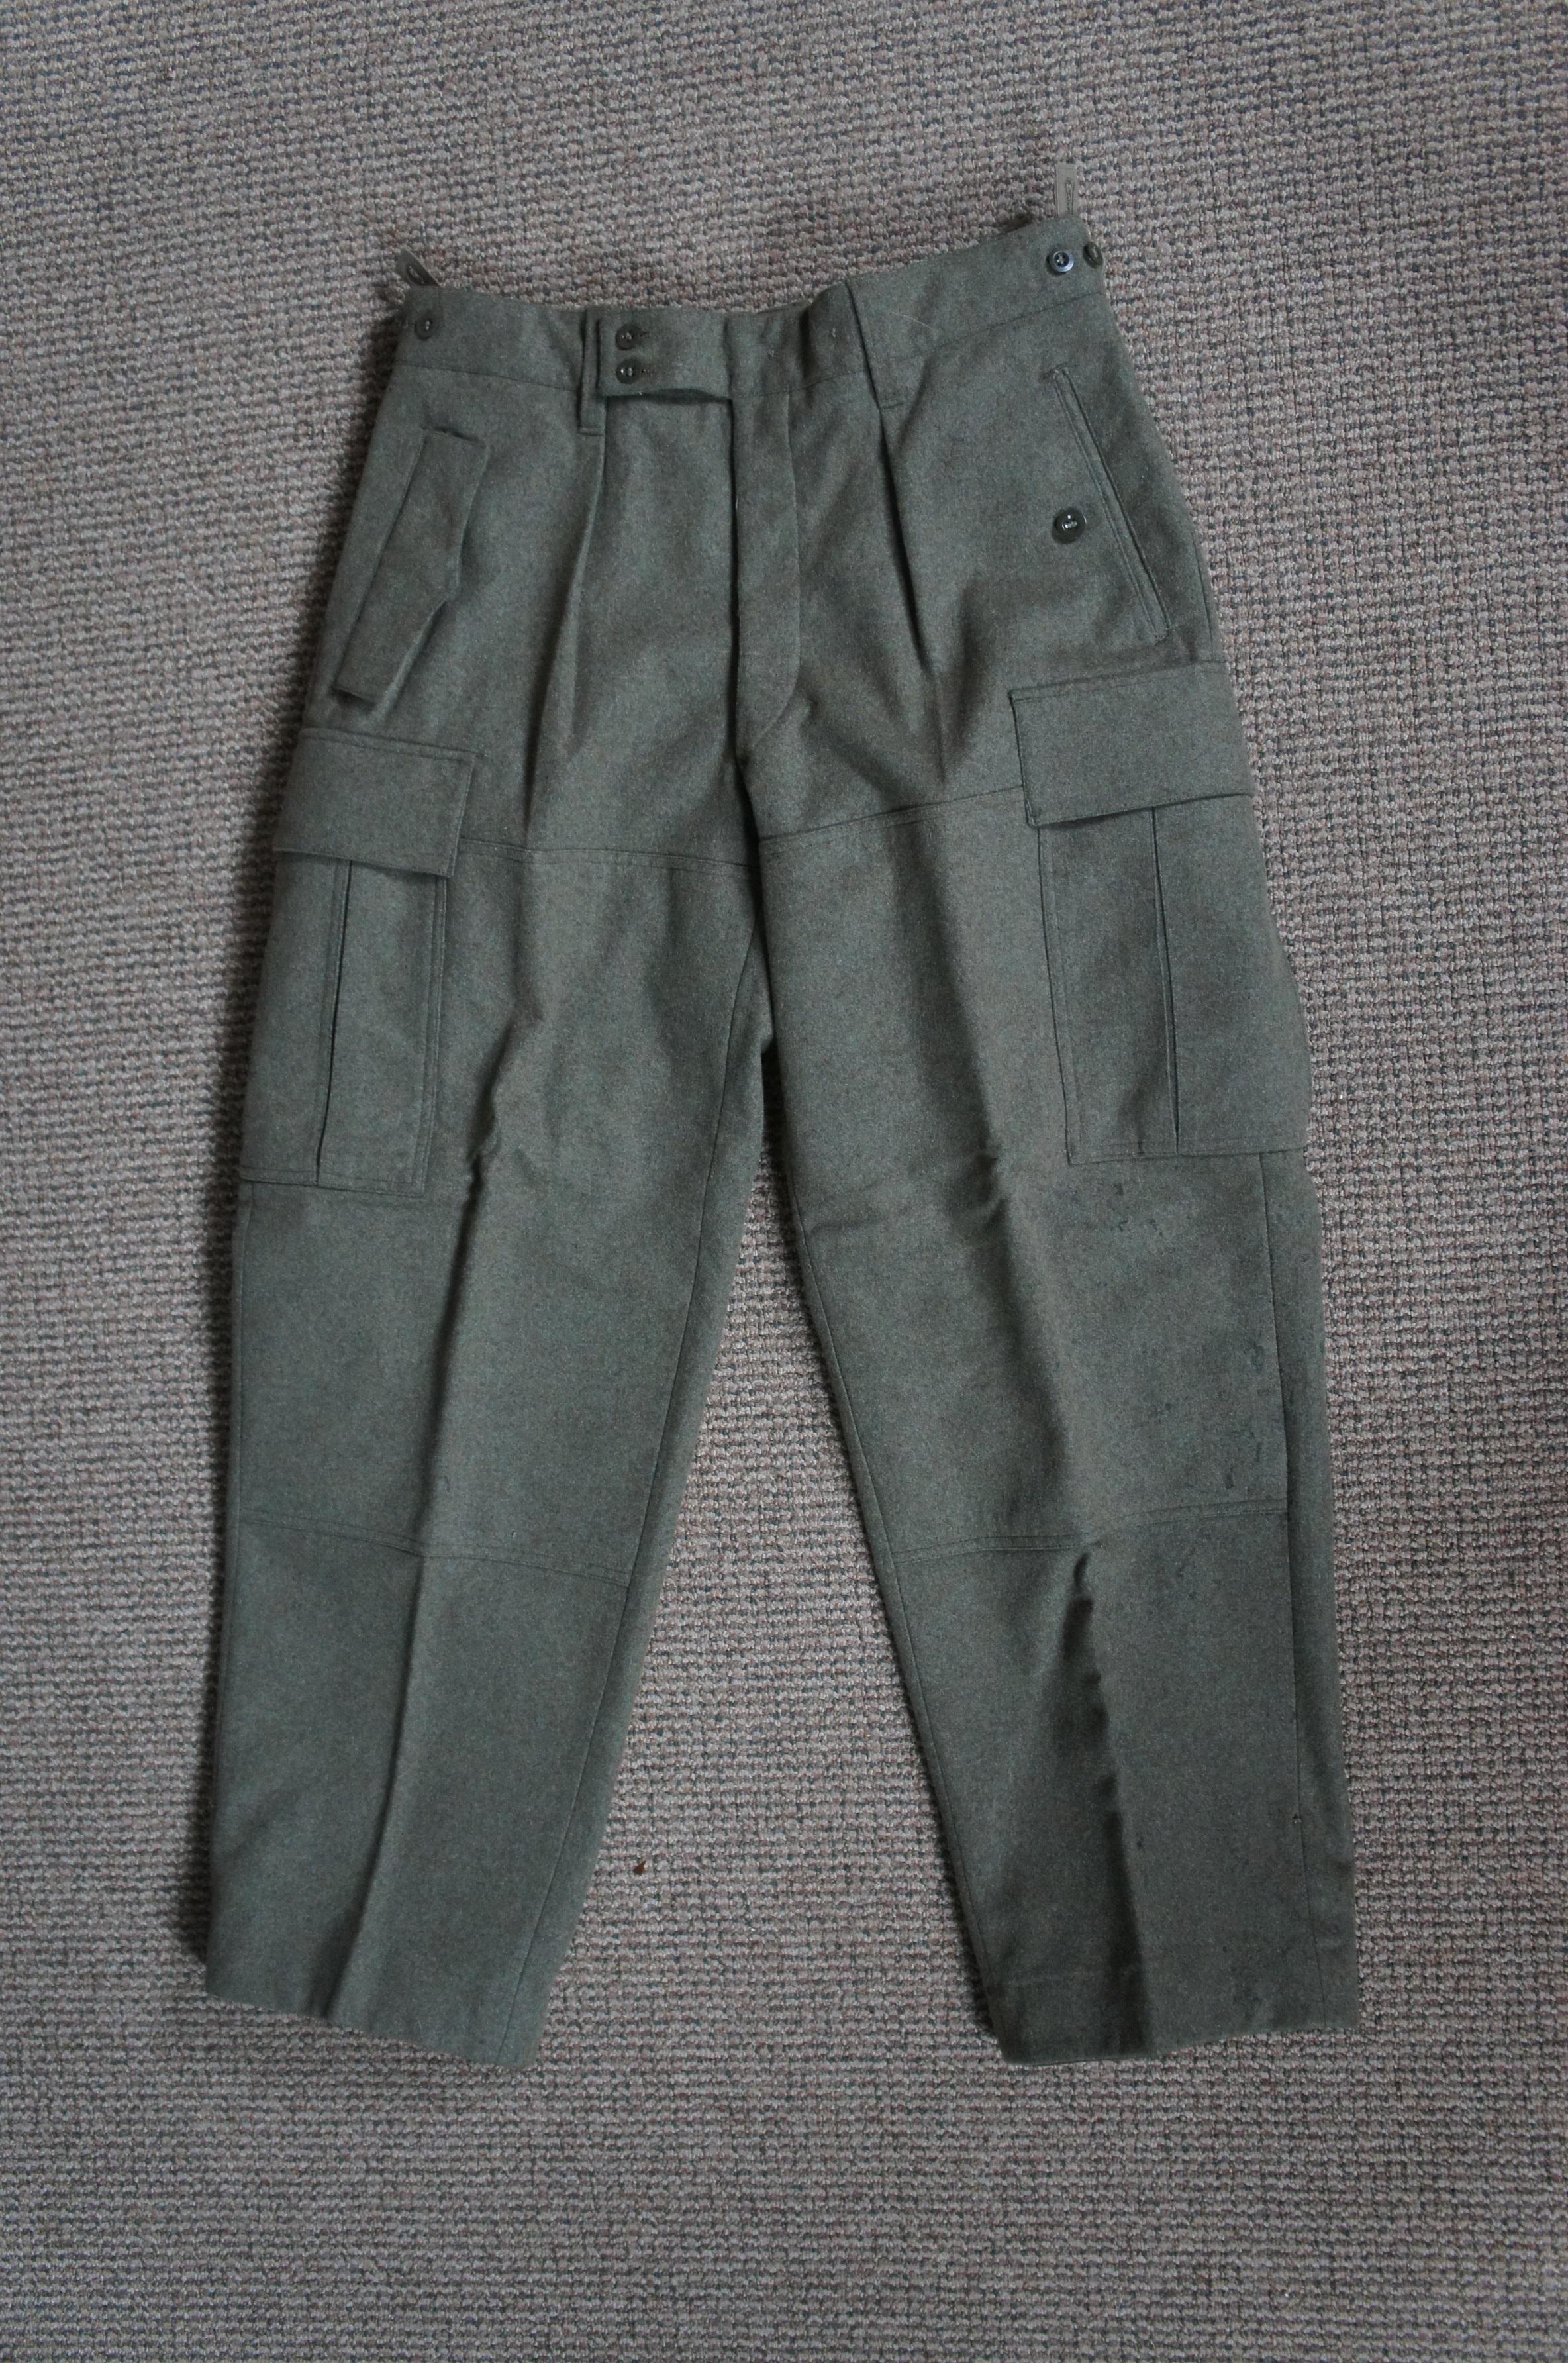 5 Pc Mid Century United States Military Pants Jackets Vietnam USMC For Sale 4